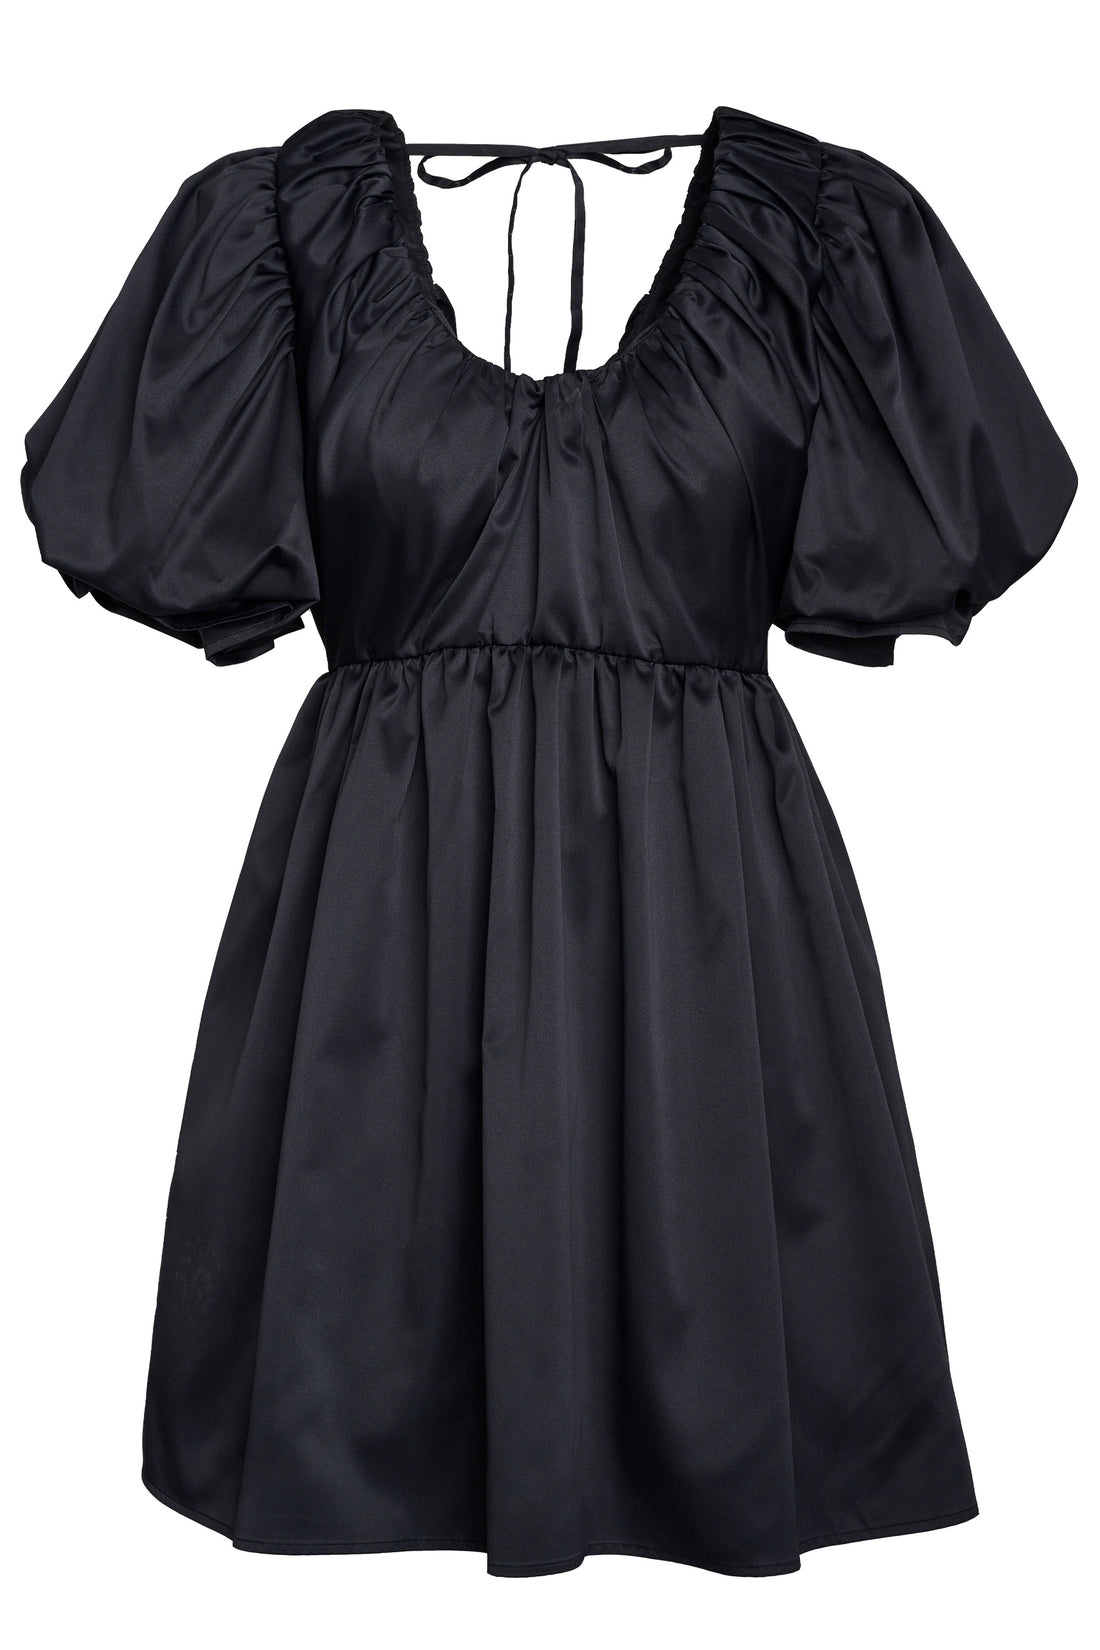 Crosby By Mollie Burch Raines Dress Black